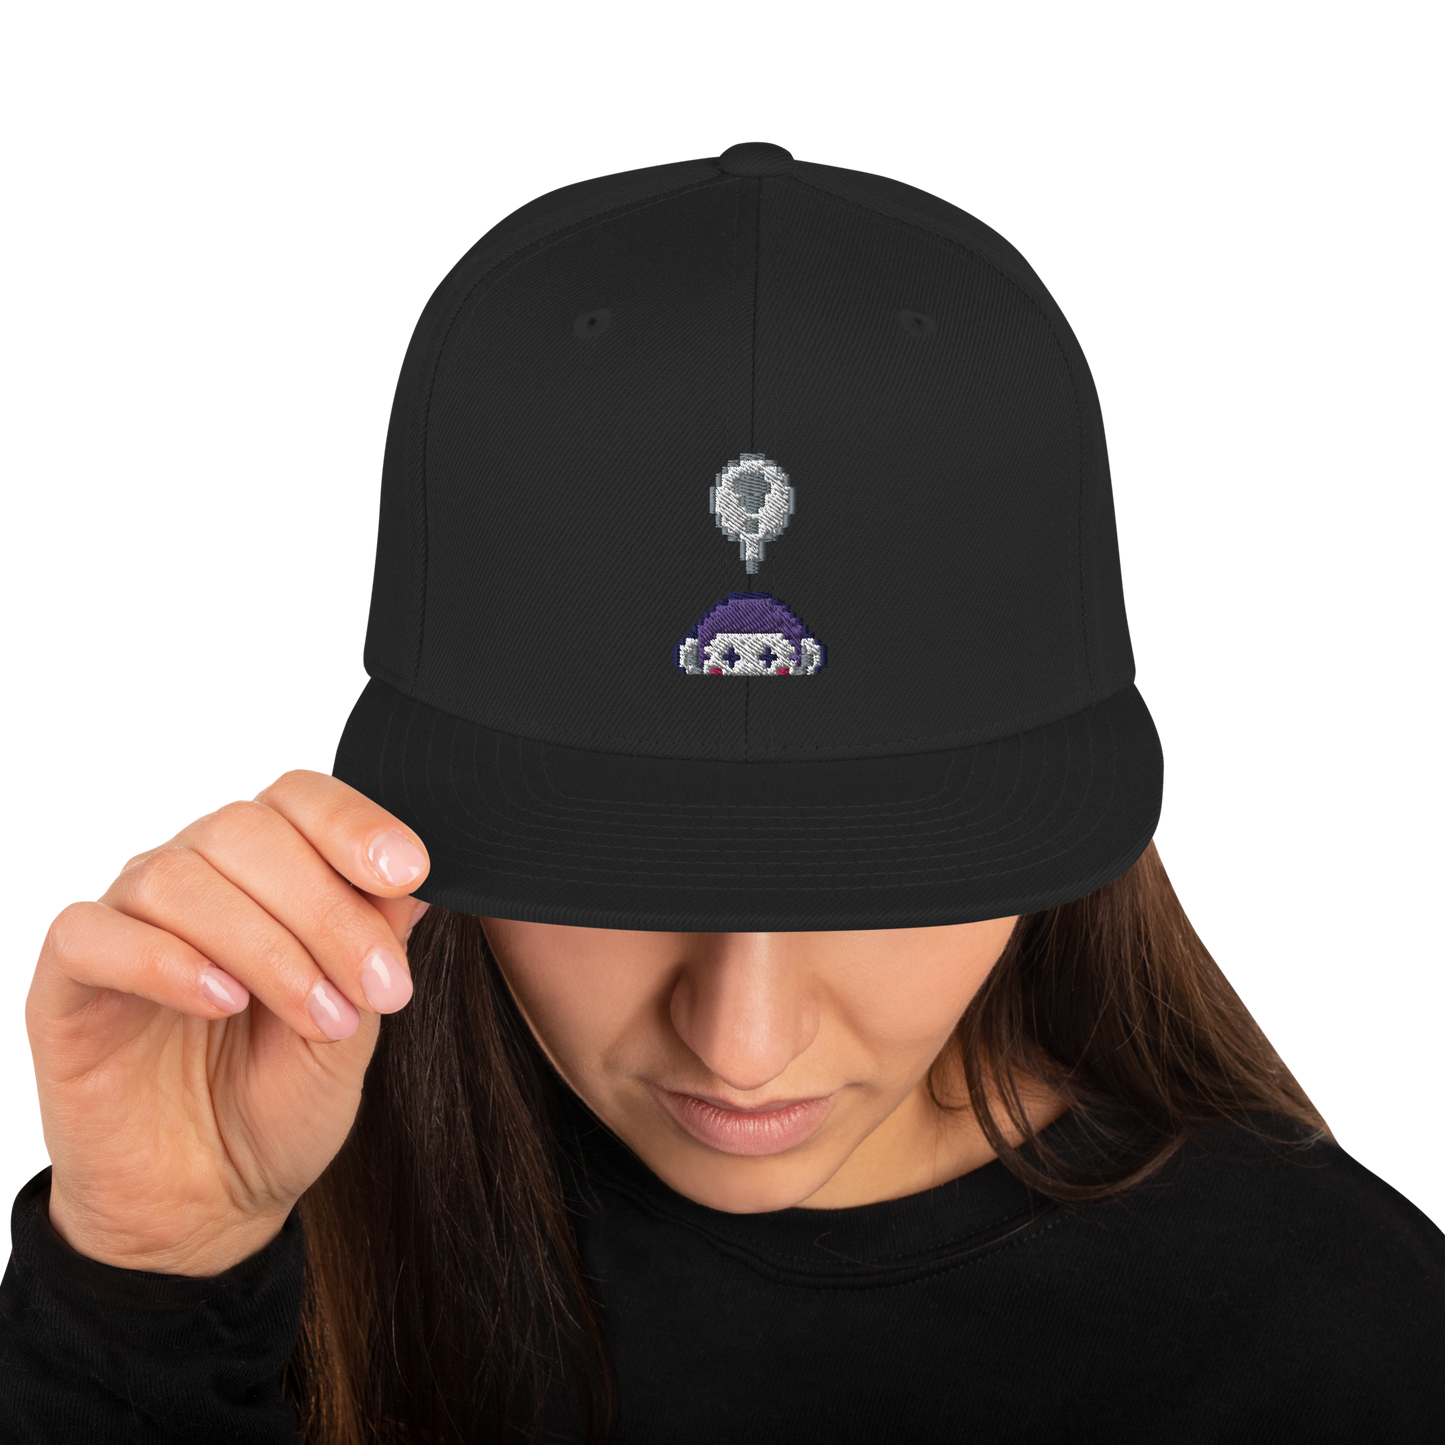 Pixelated Snapback Hat